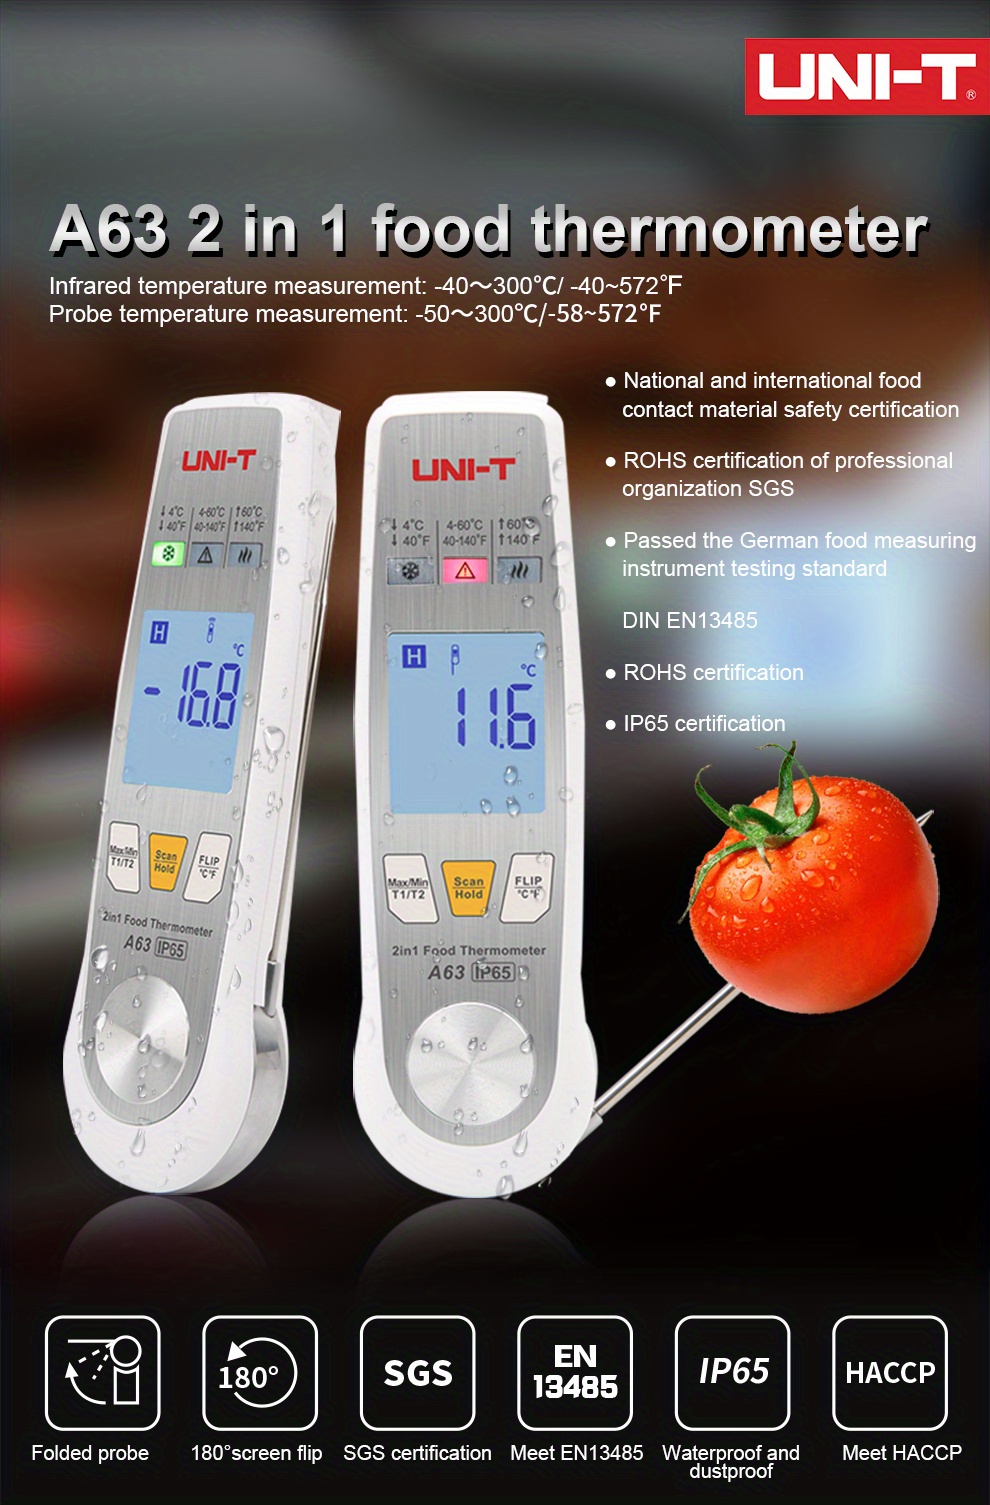 Infrarot Thermometer für Lebensmittel